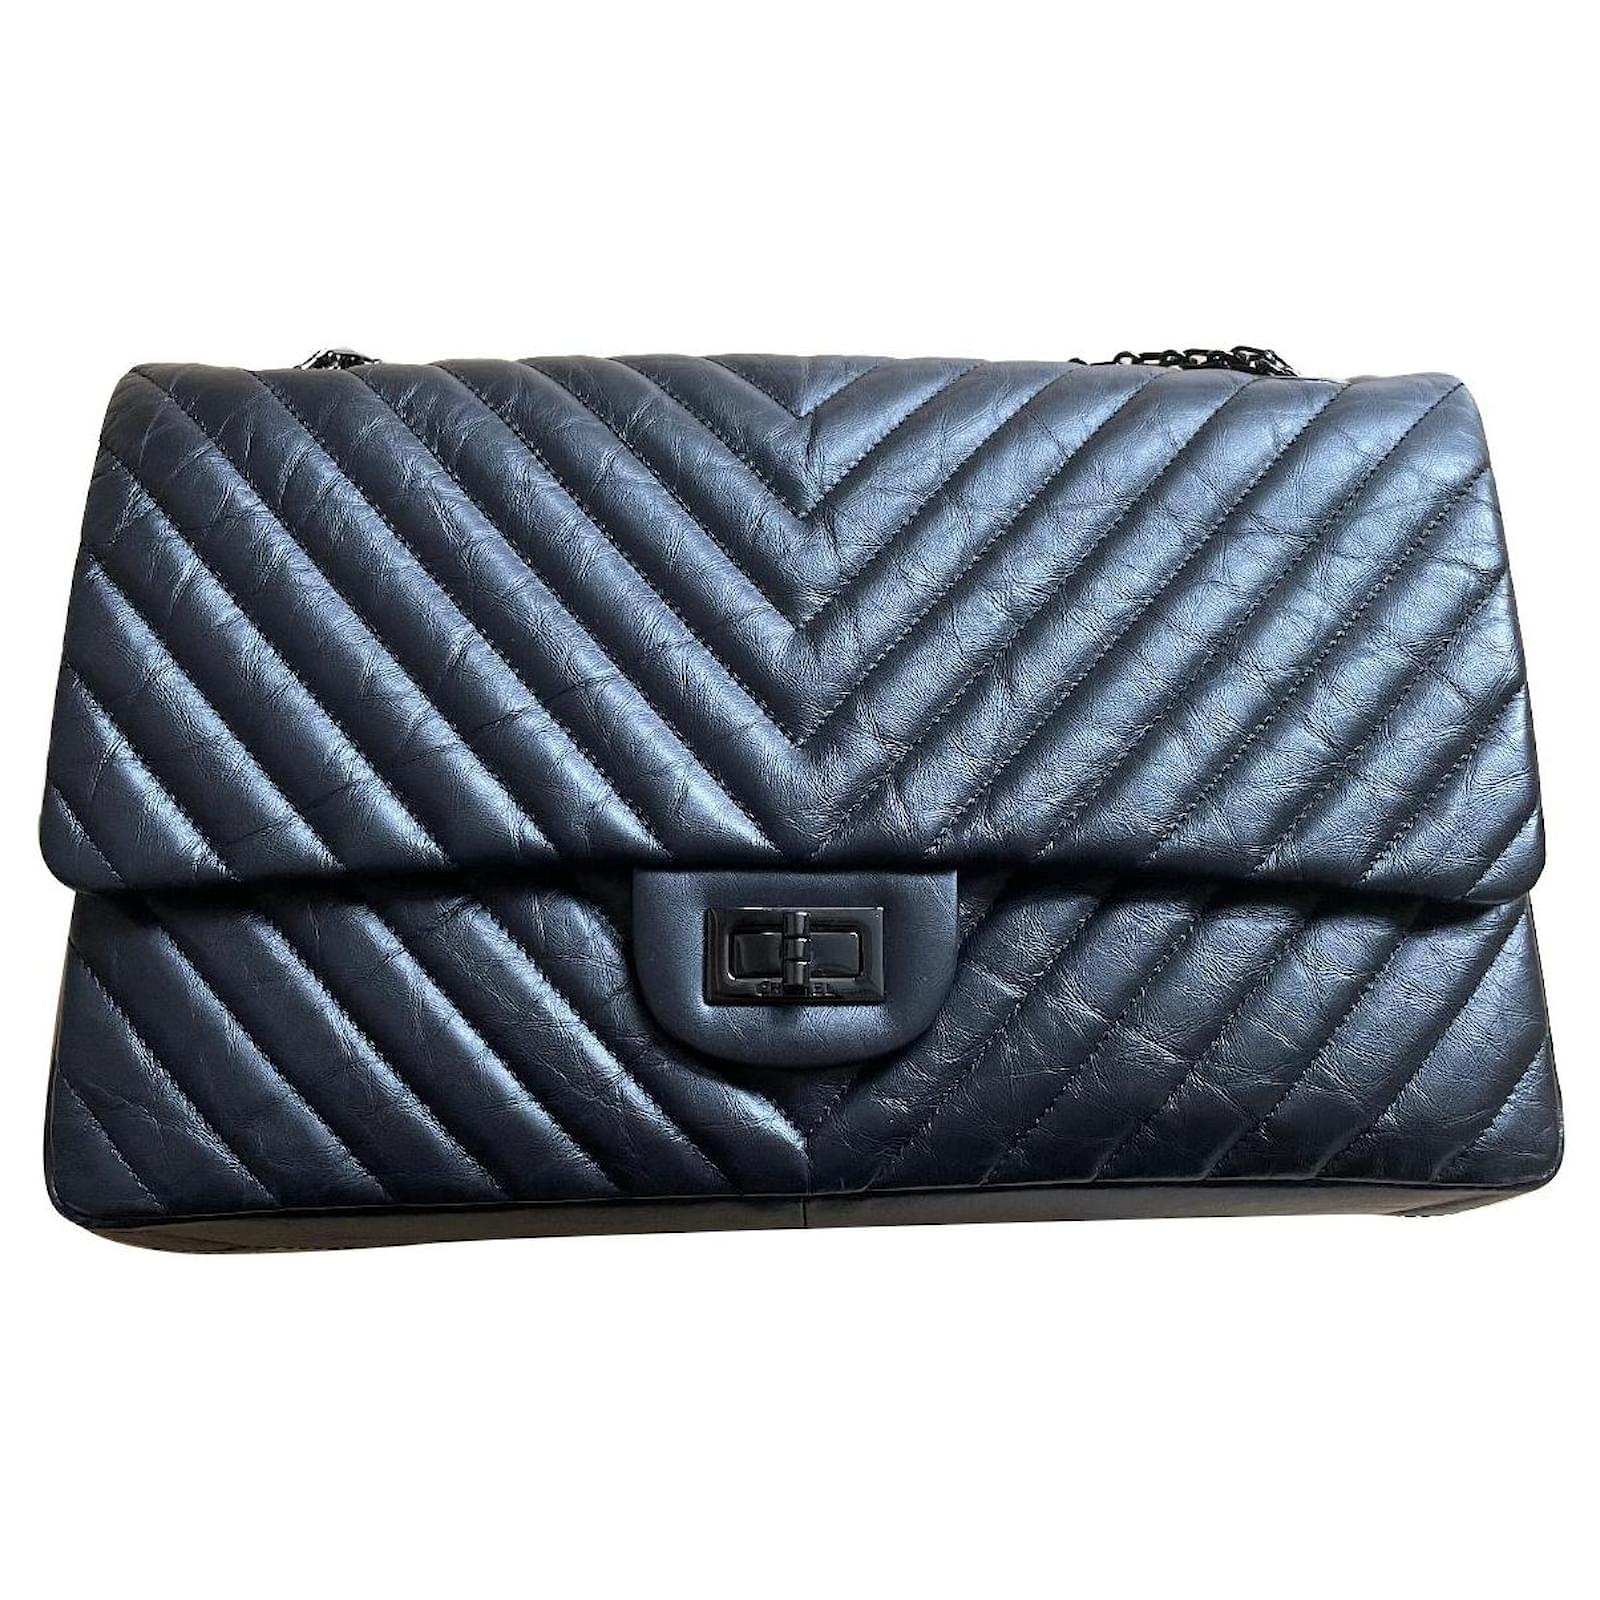 Handbags Chanel 2.55